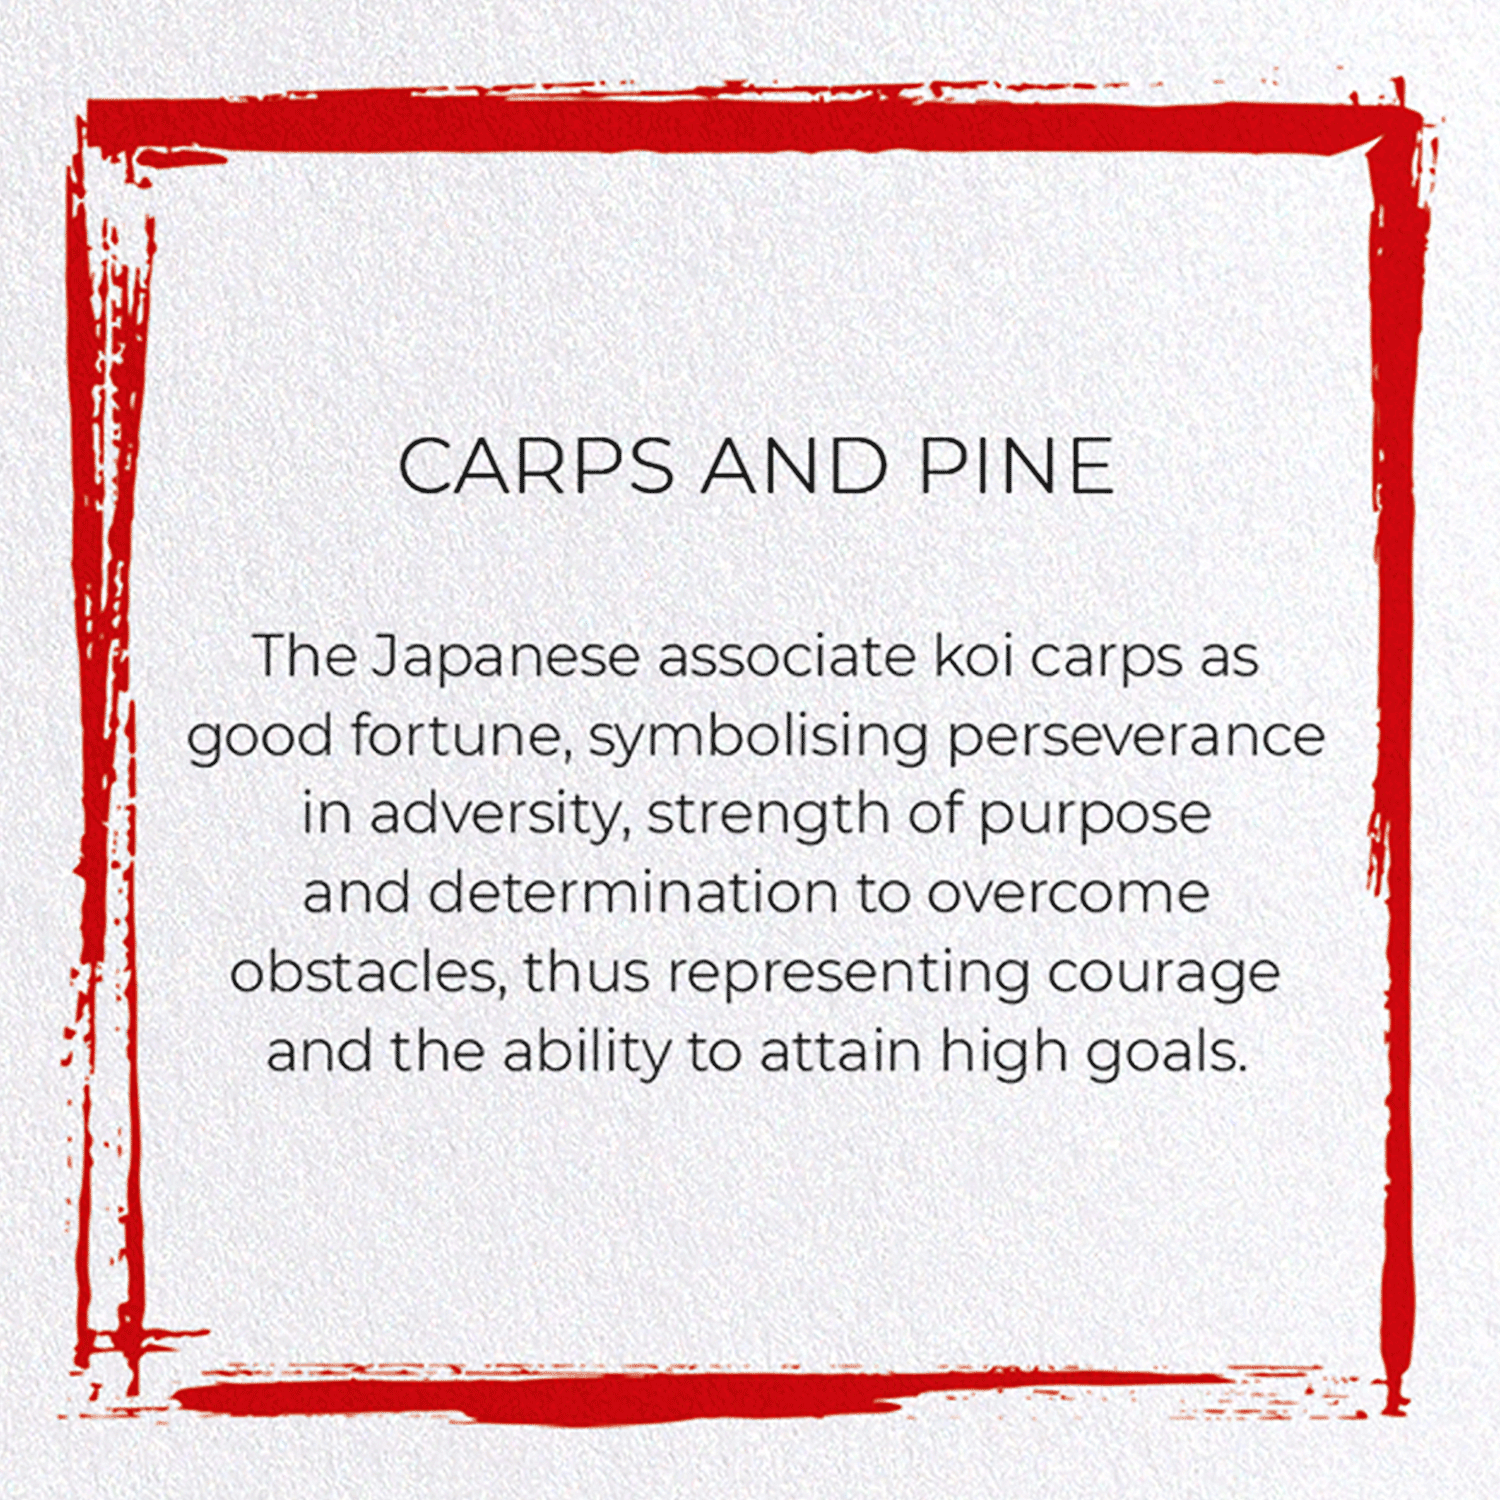 CARPS AND PINE